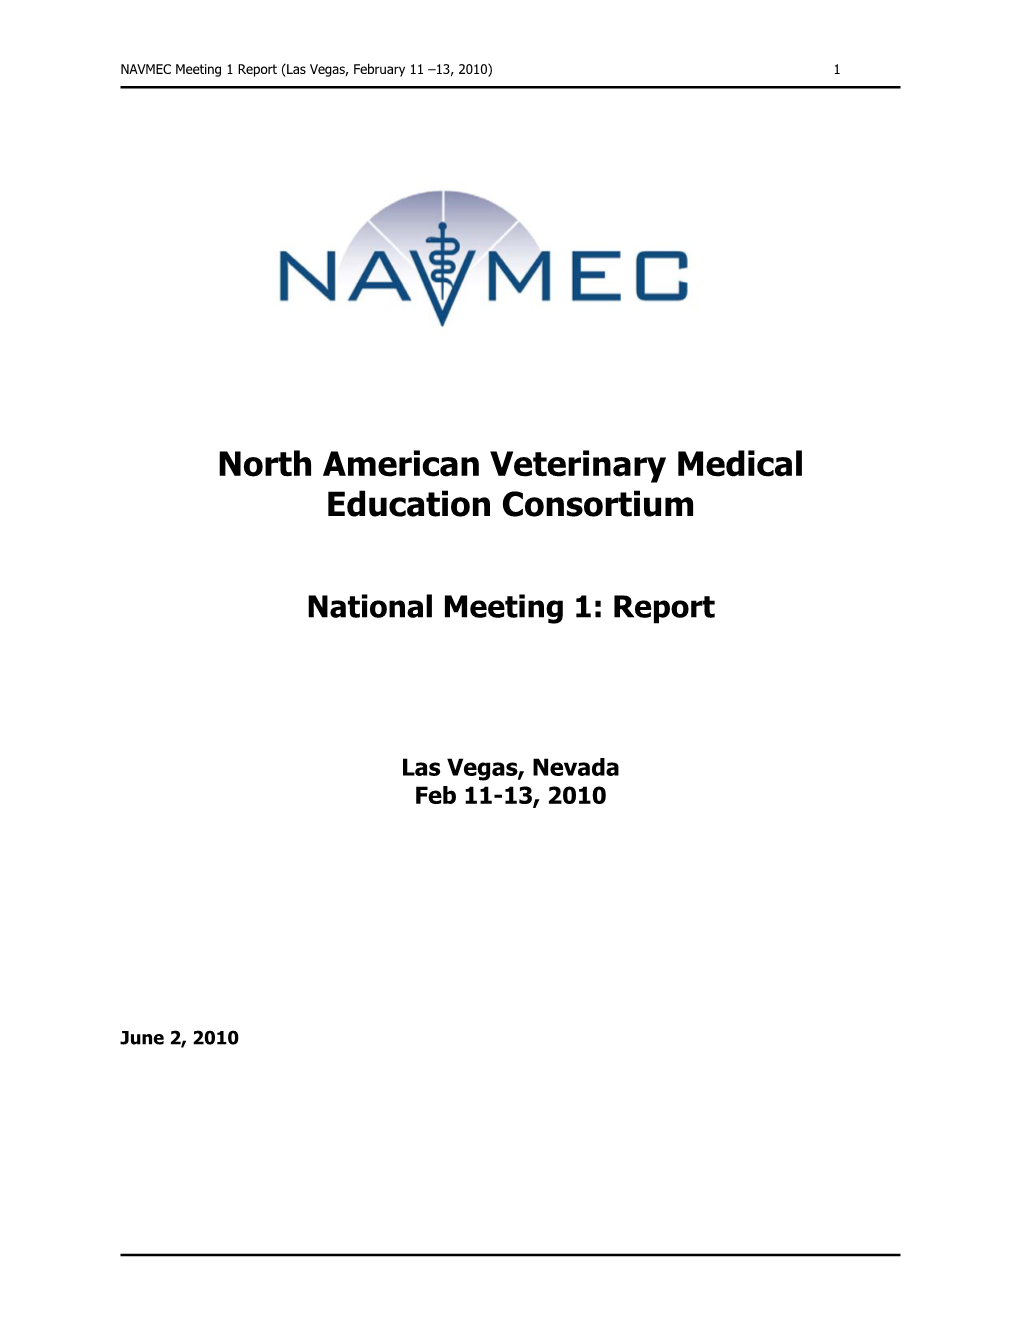 North American Veterinary Medical Education Consortium